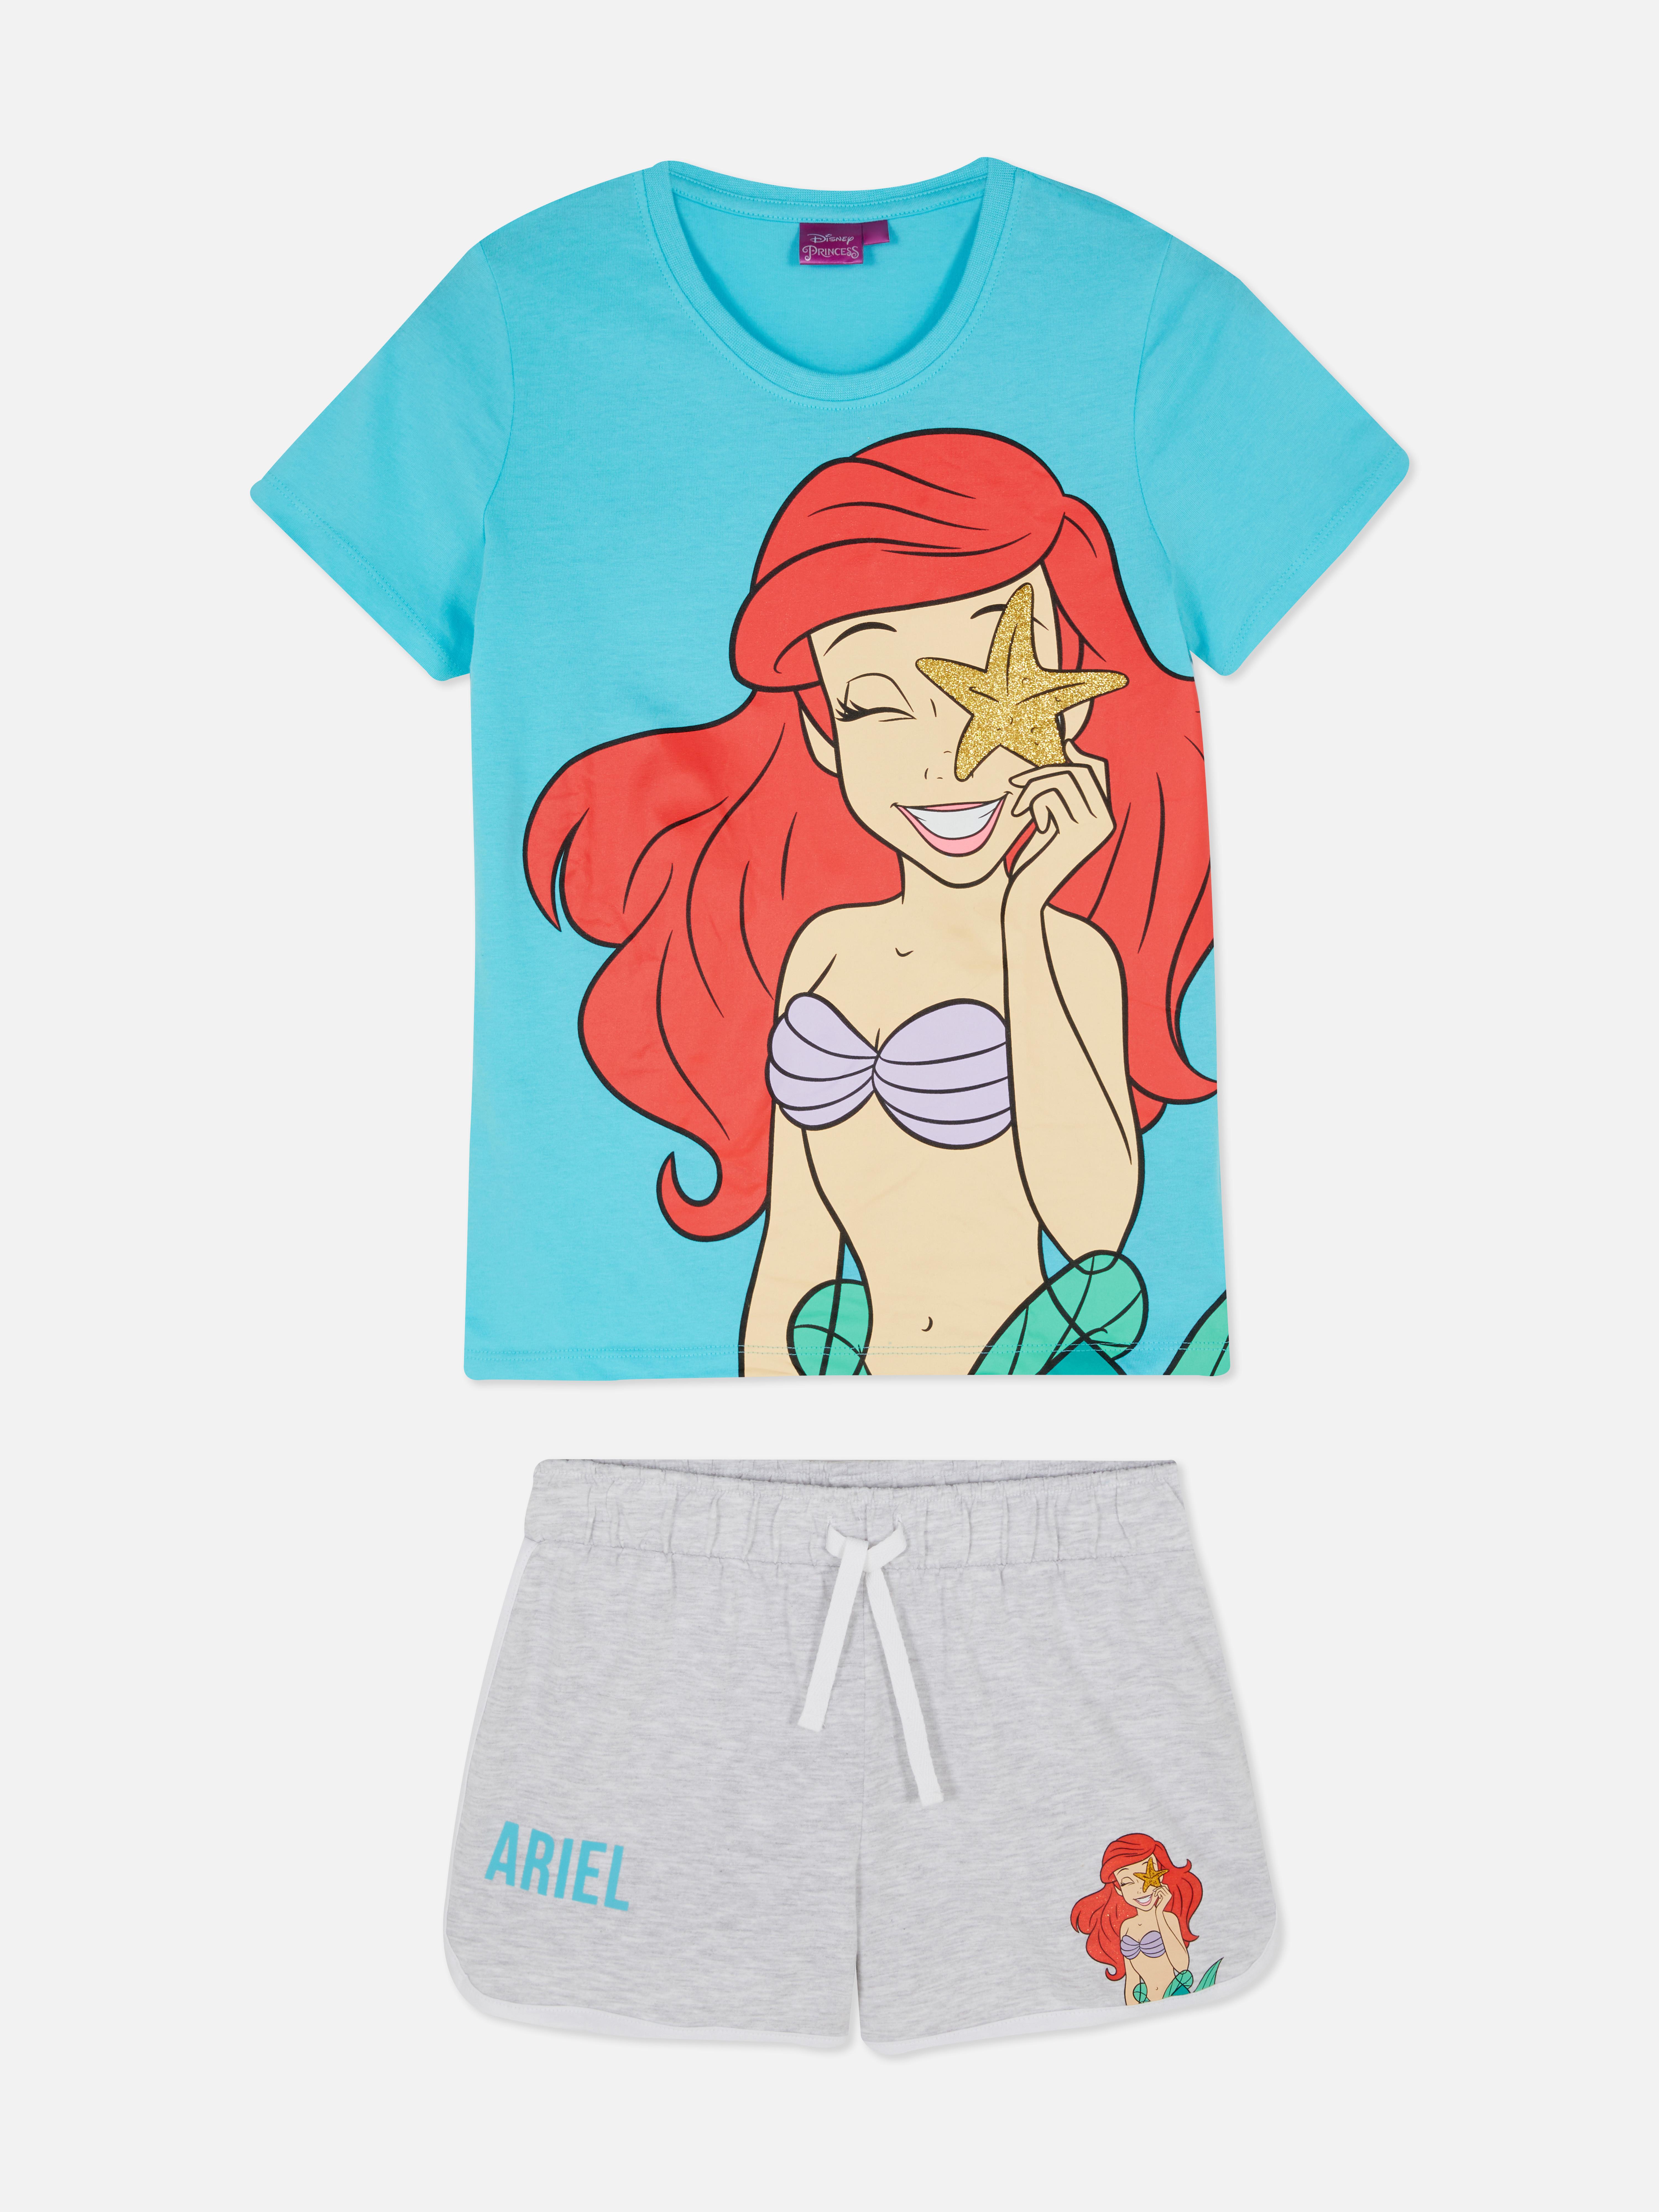 Primark has the cutest underwear!! Ariel's my favourite princess